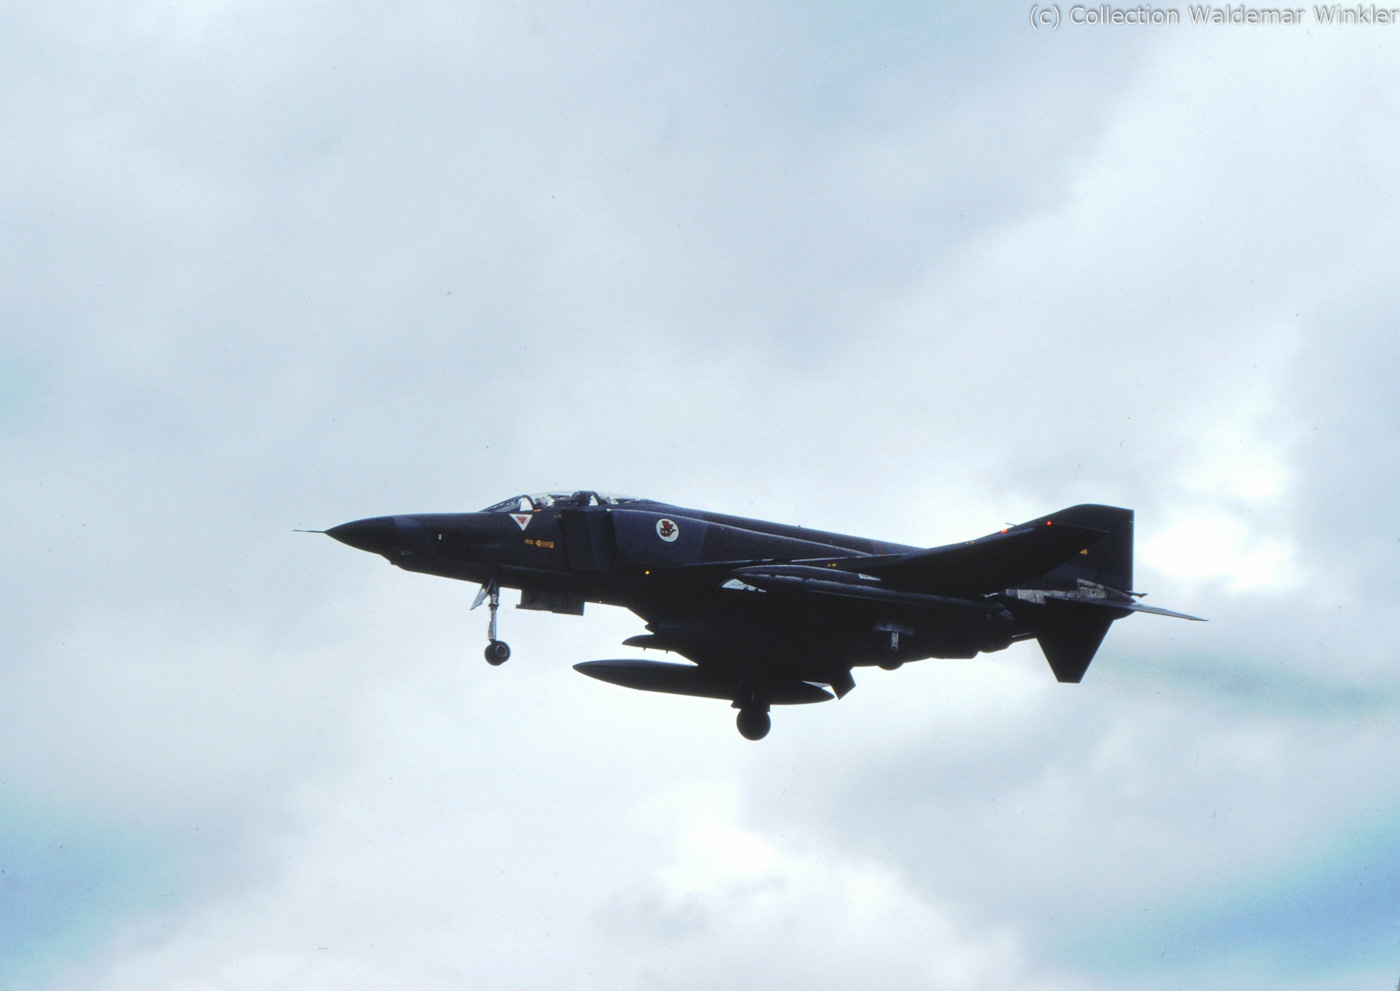 F-4_Phantom_II_DSC_1161.jpg